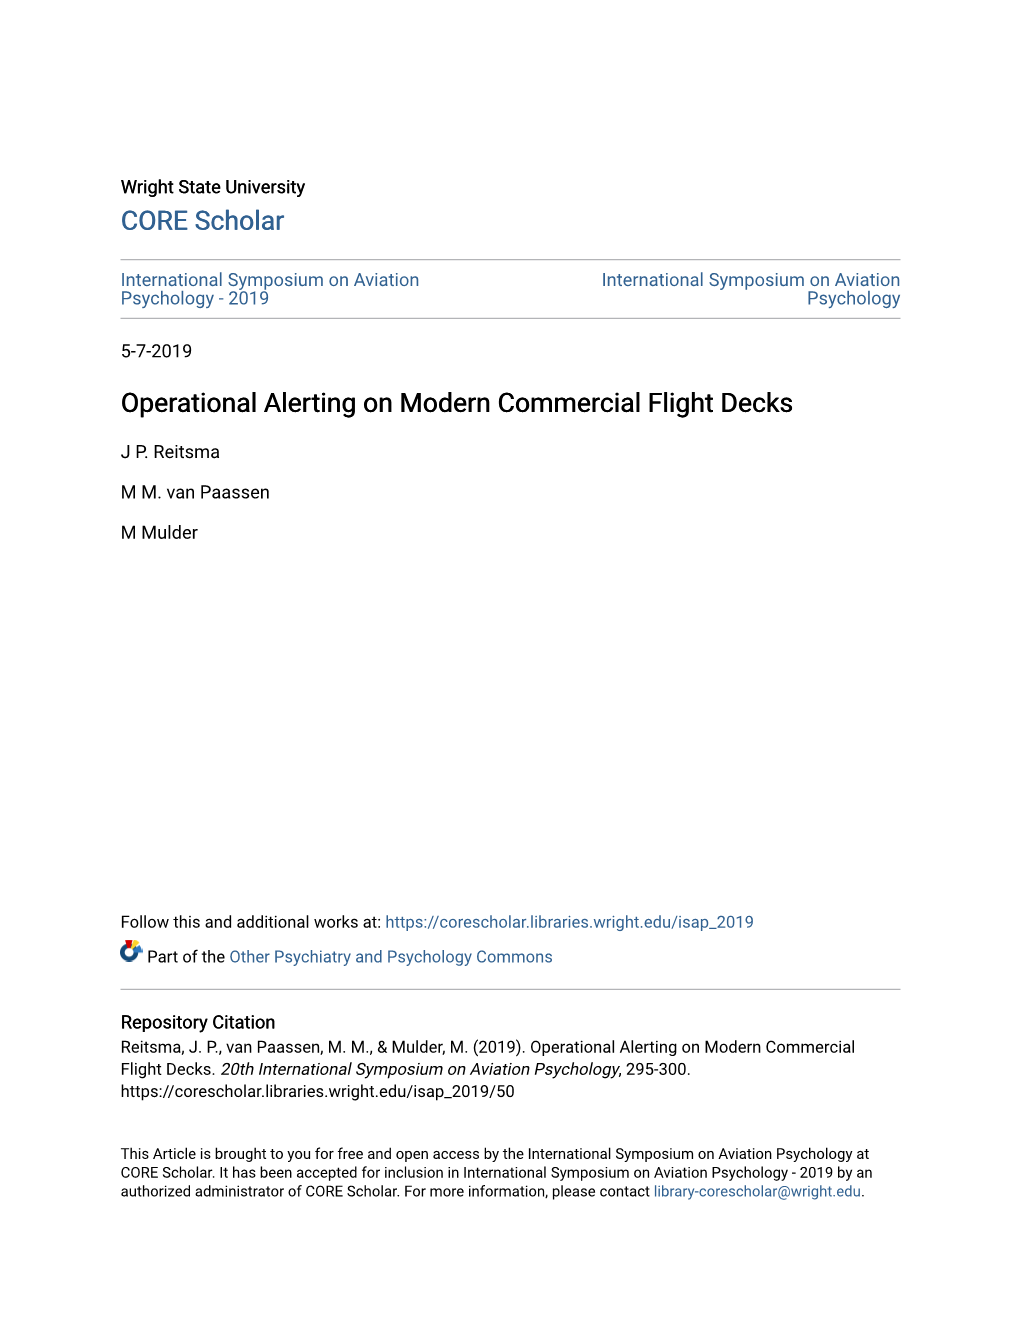 Operational Alerting on Modern Commercial Flight Decks